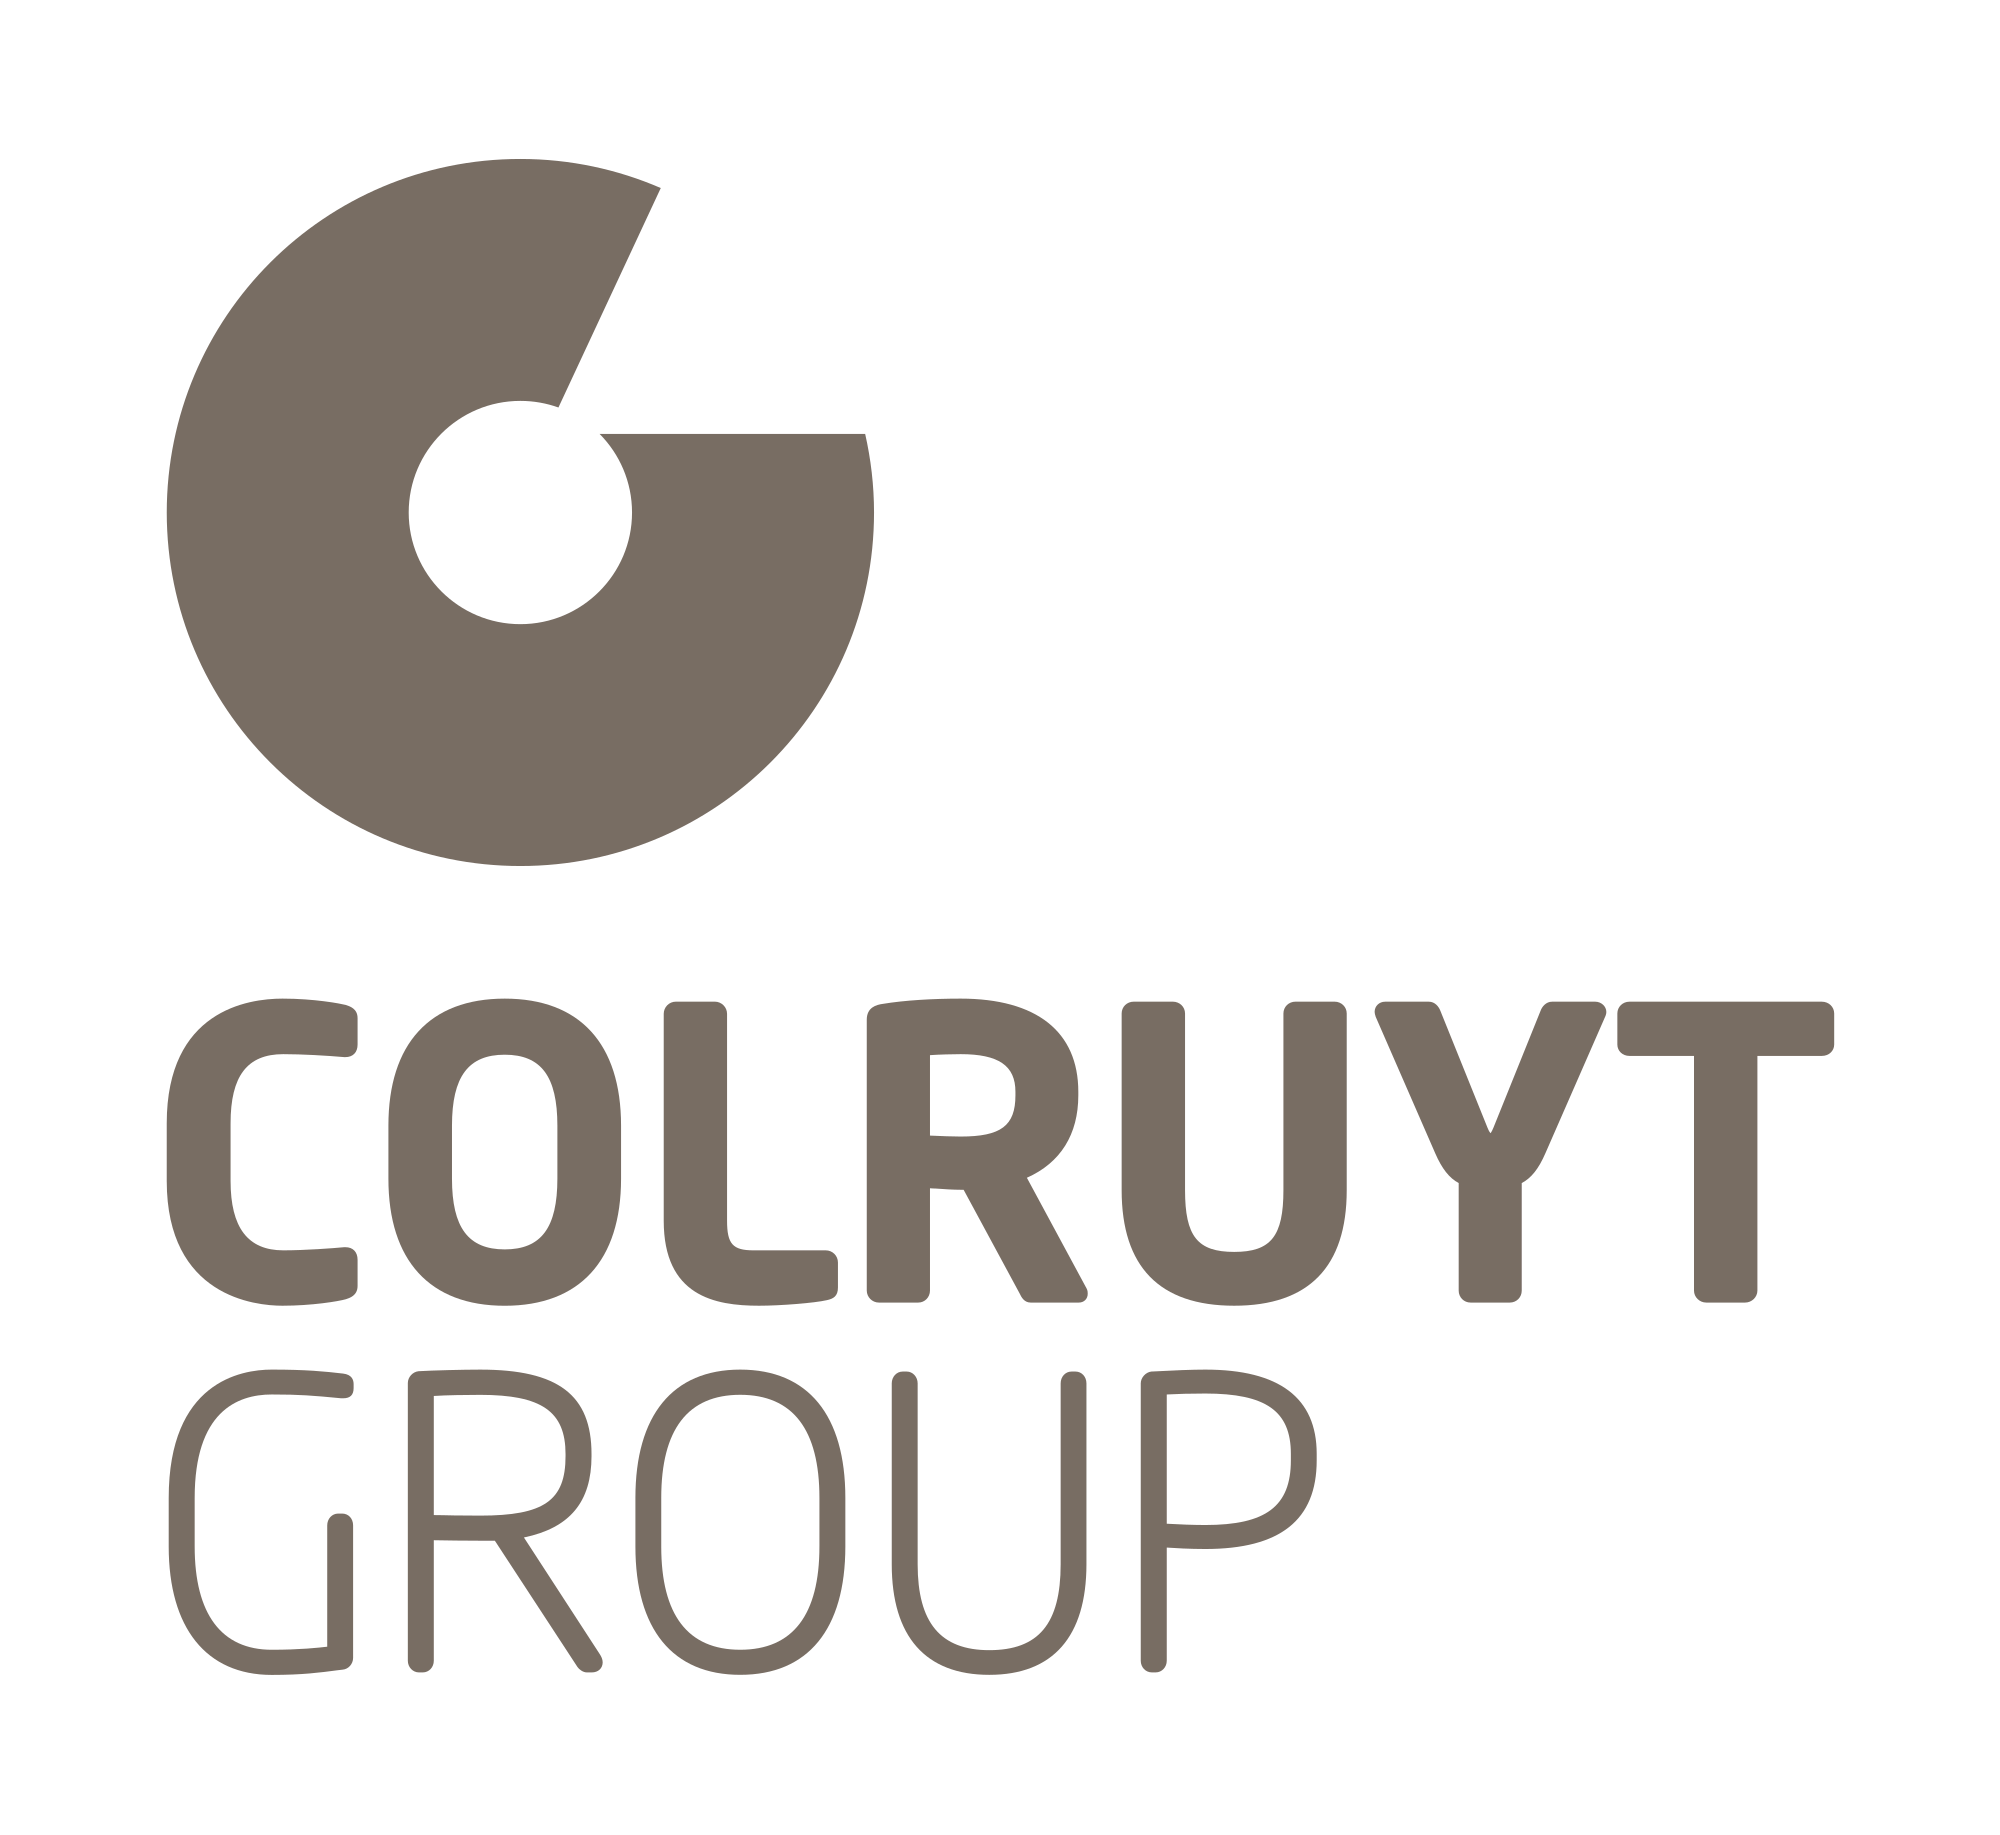 Colruyt group